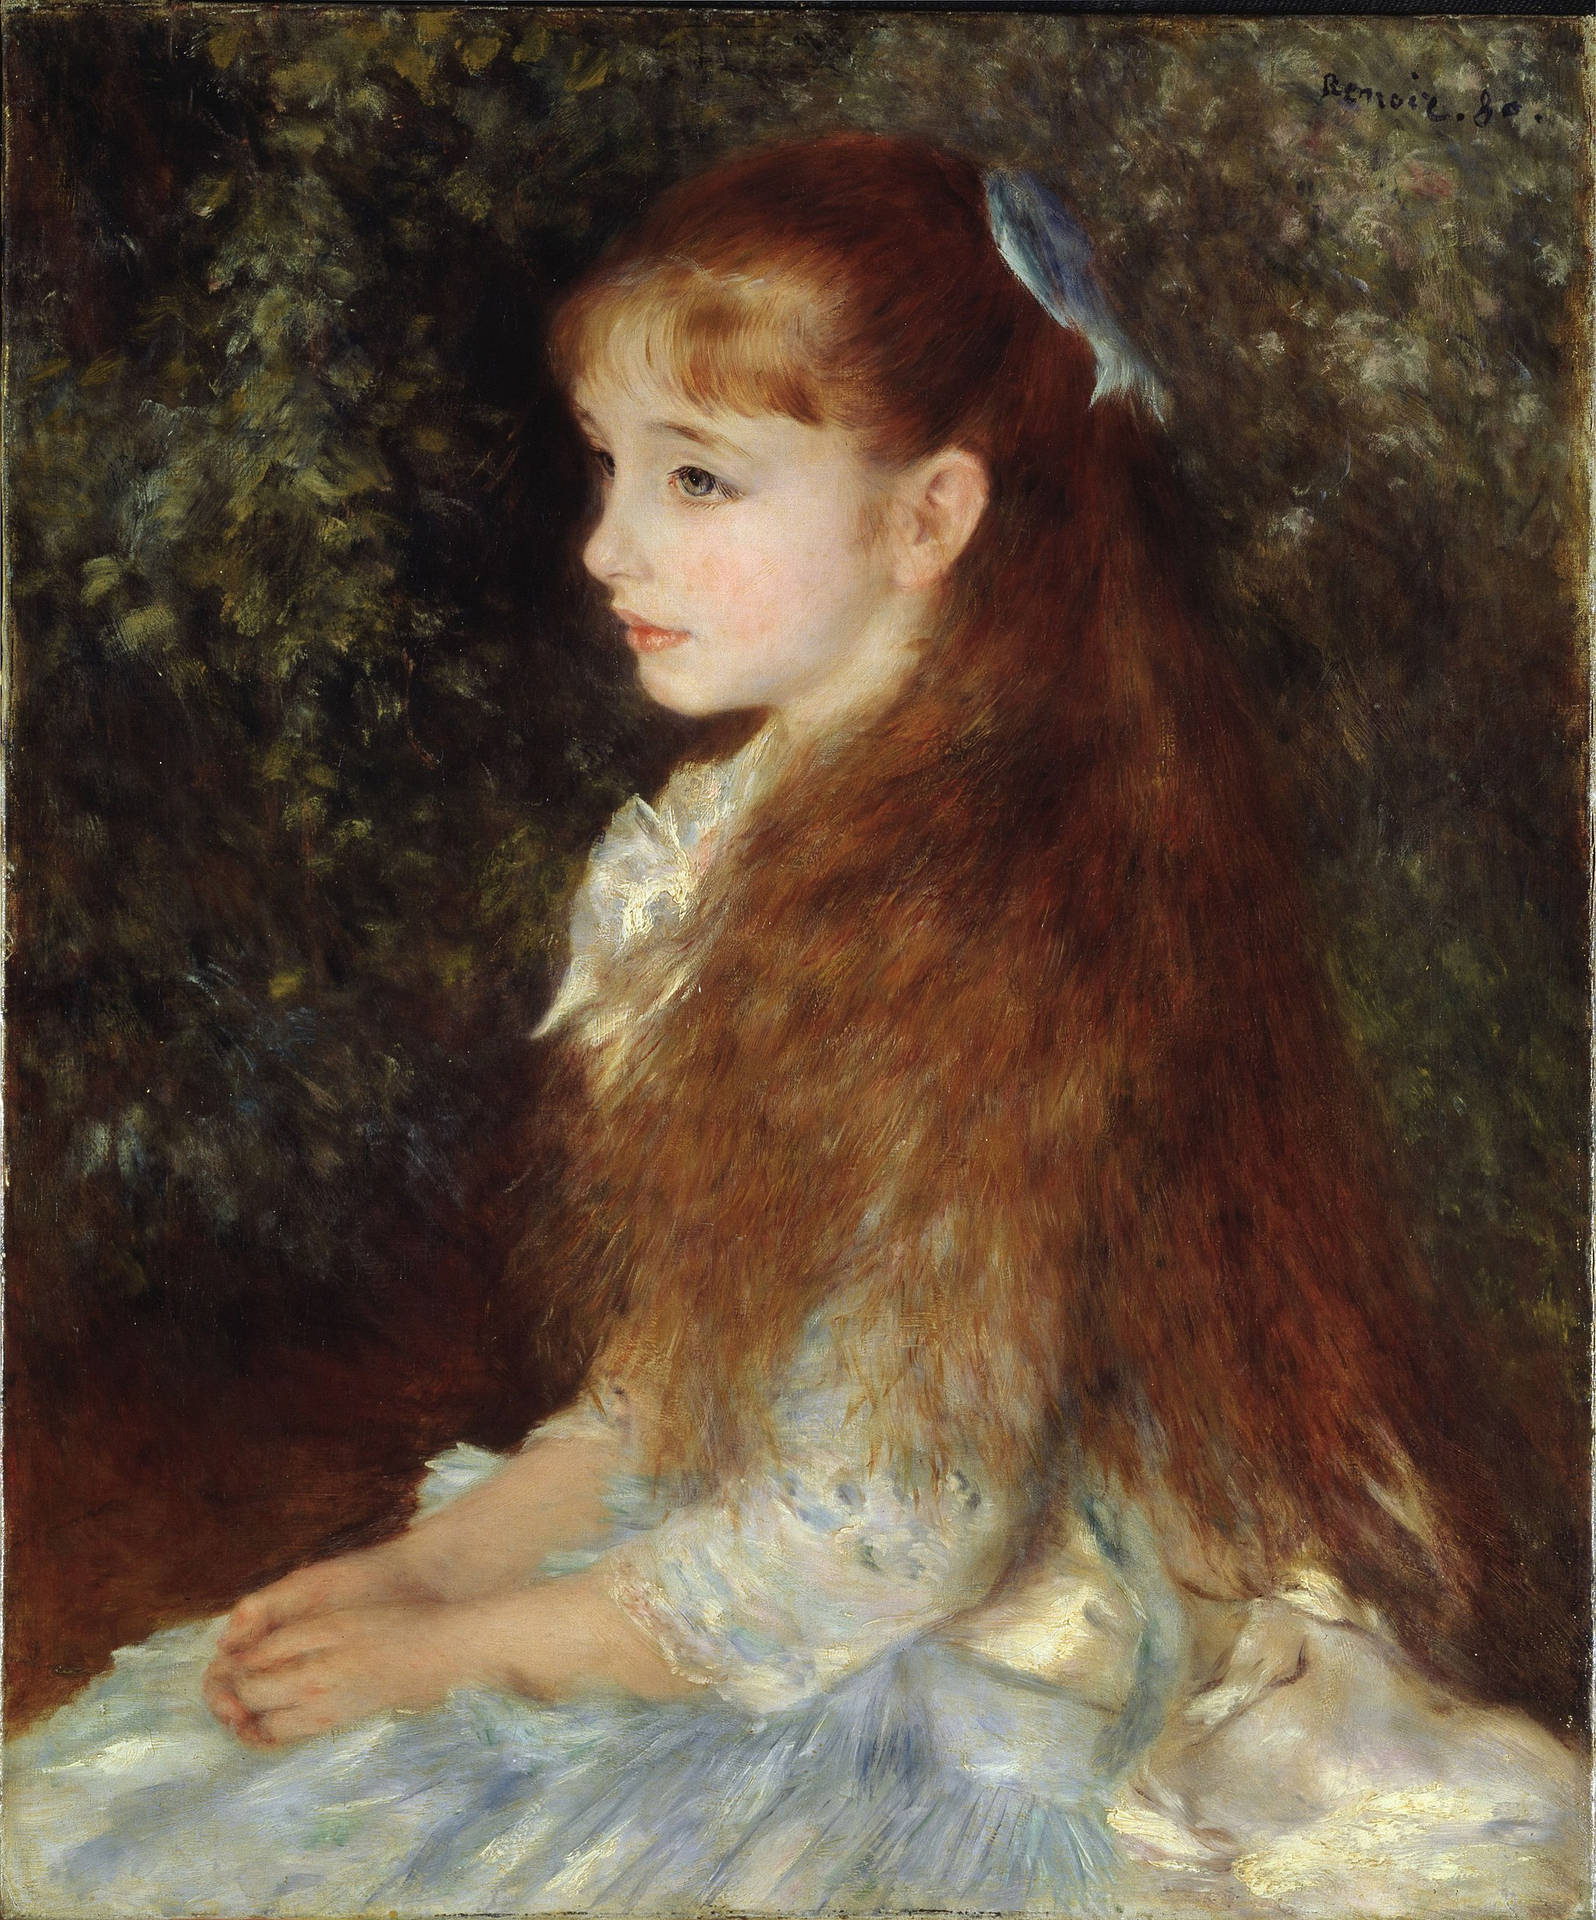 Caption: Mademoiselle Irene Cahen - A Classic Renoir Masterpiece Background